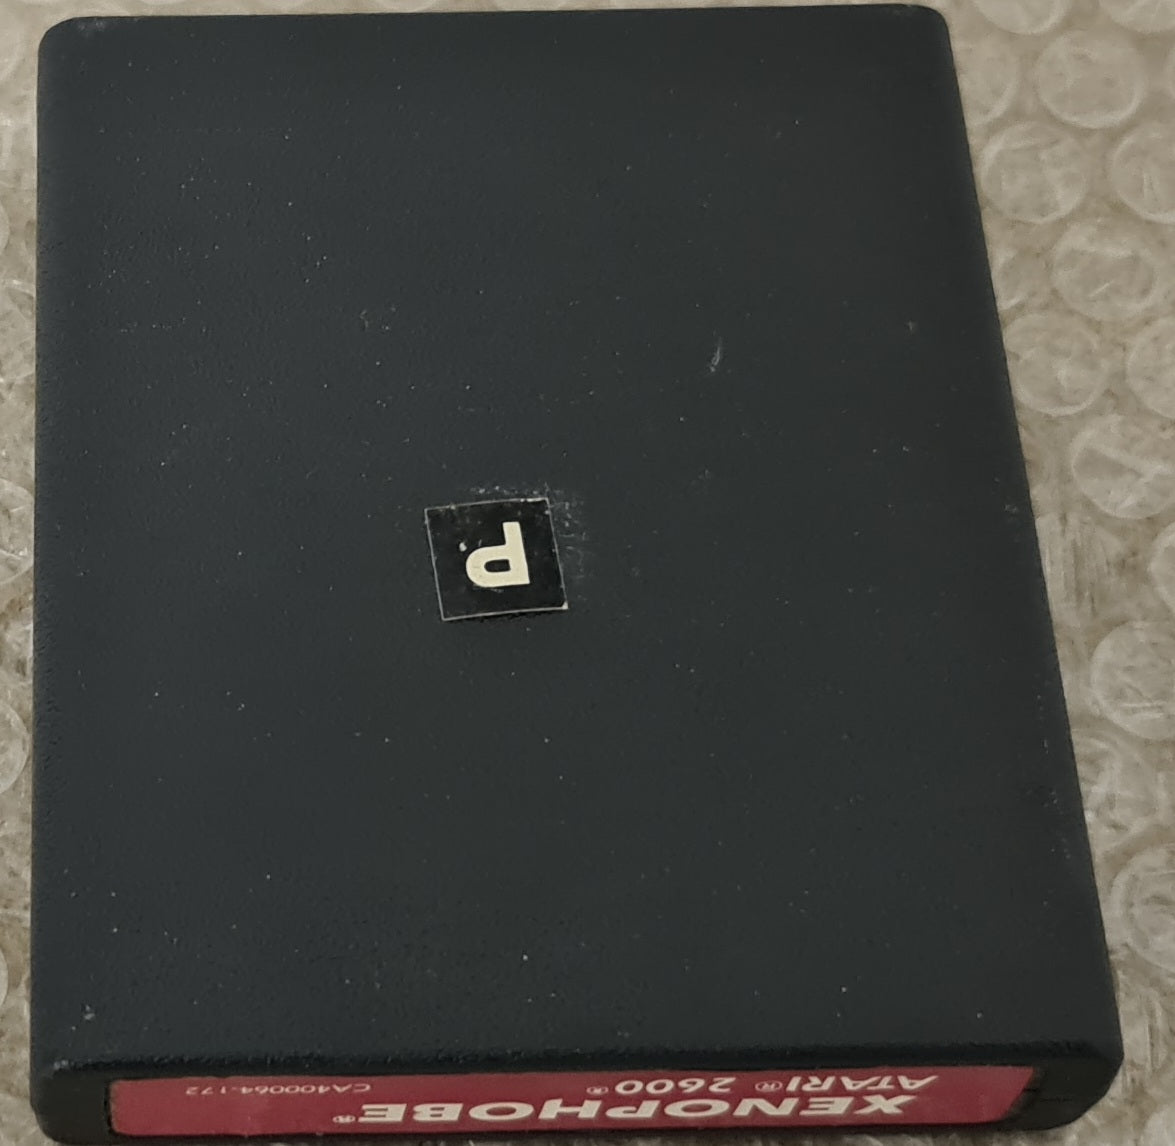 Xenophobe Atari 2600 Game Cartridge Only